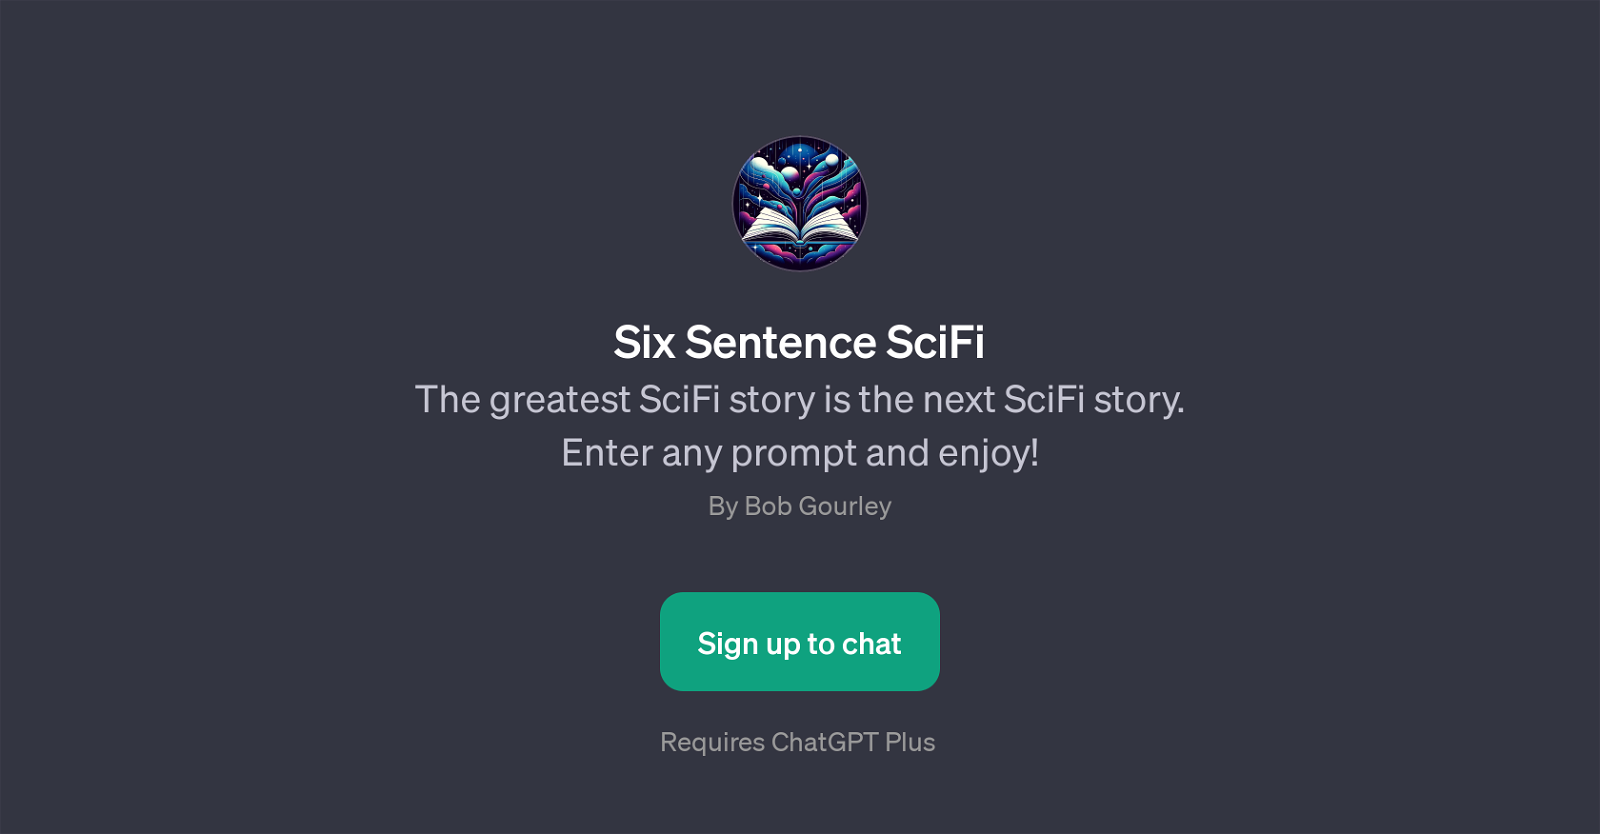 Six Sentence SciFi website